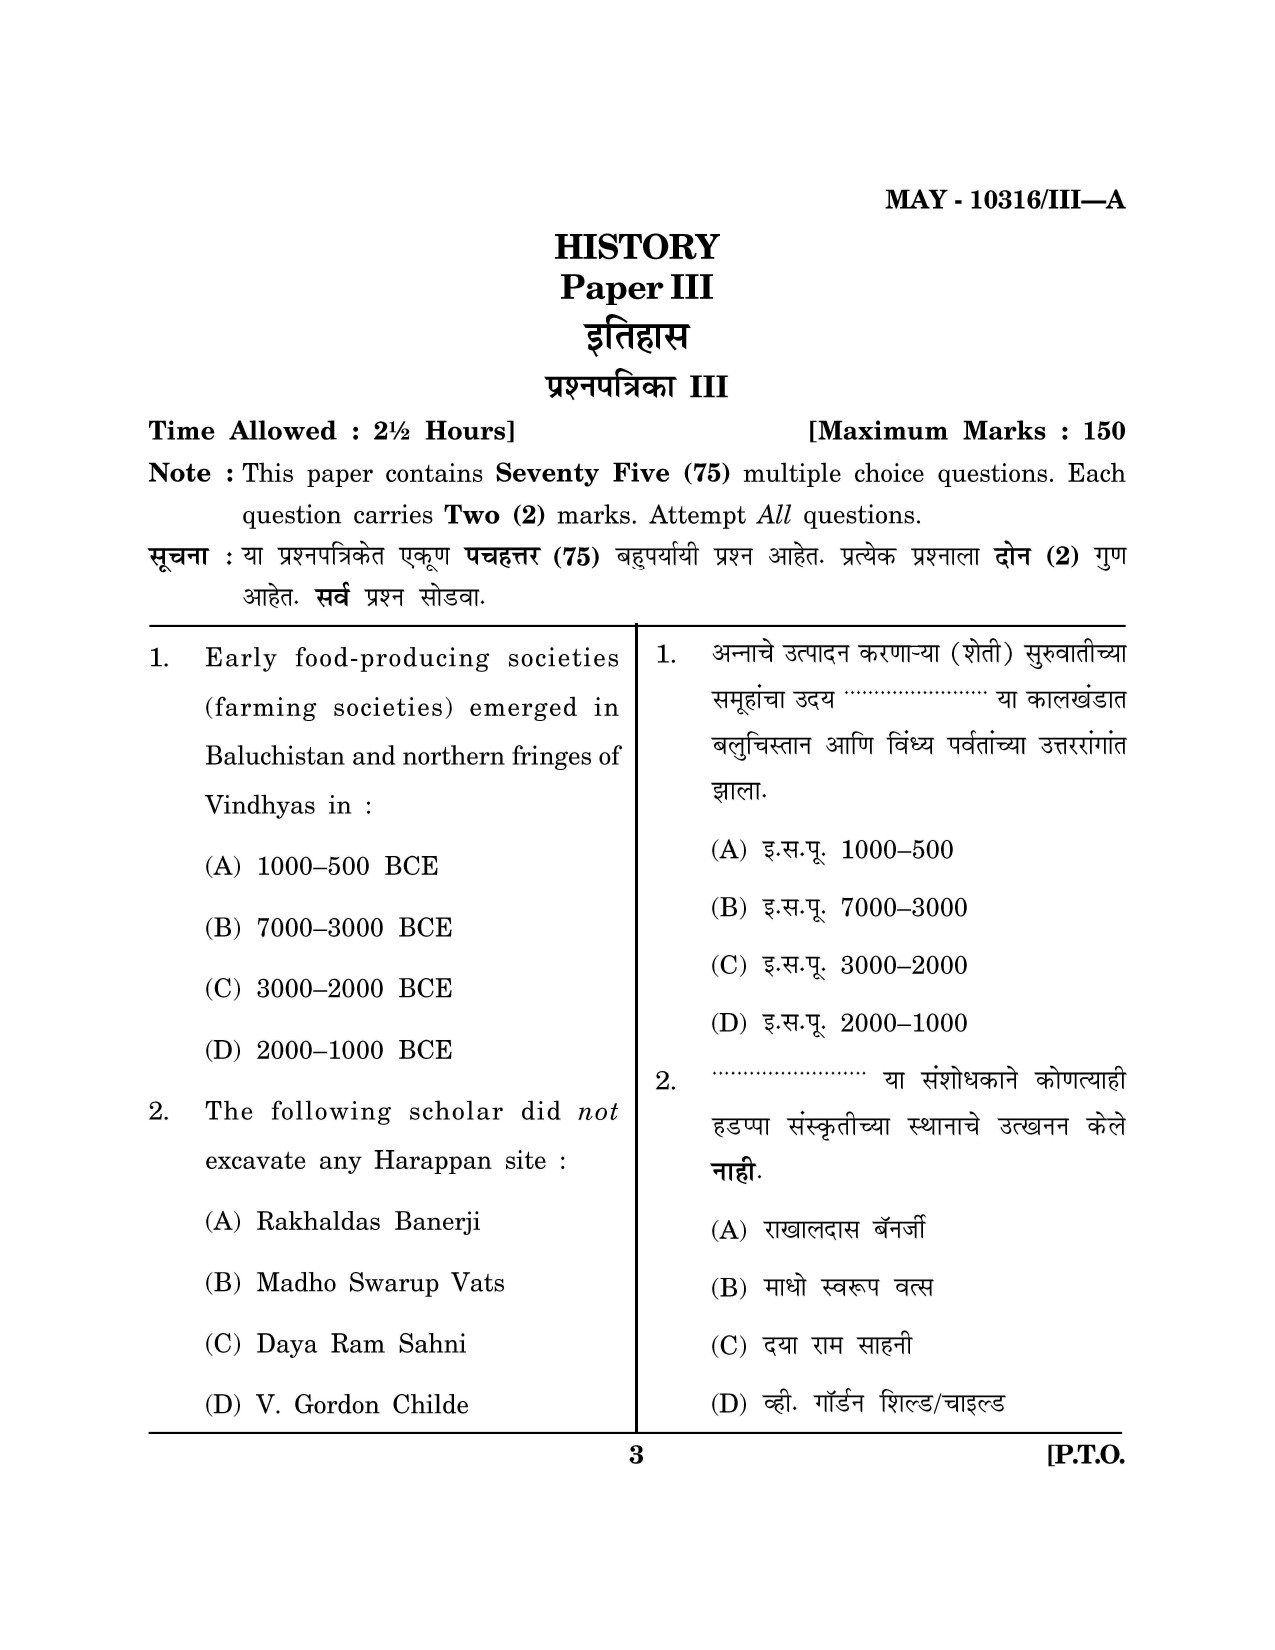 Maharashtra SET History Question Paper III May 2016 2